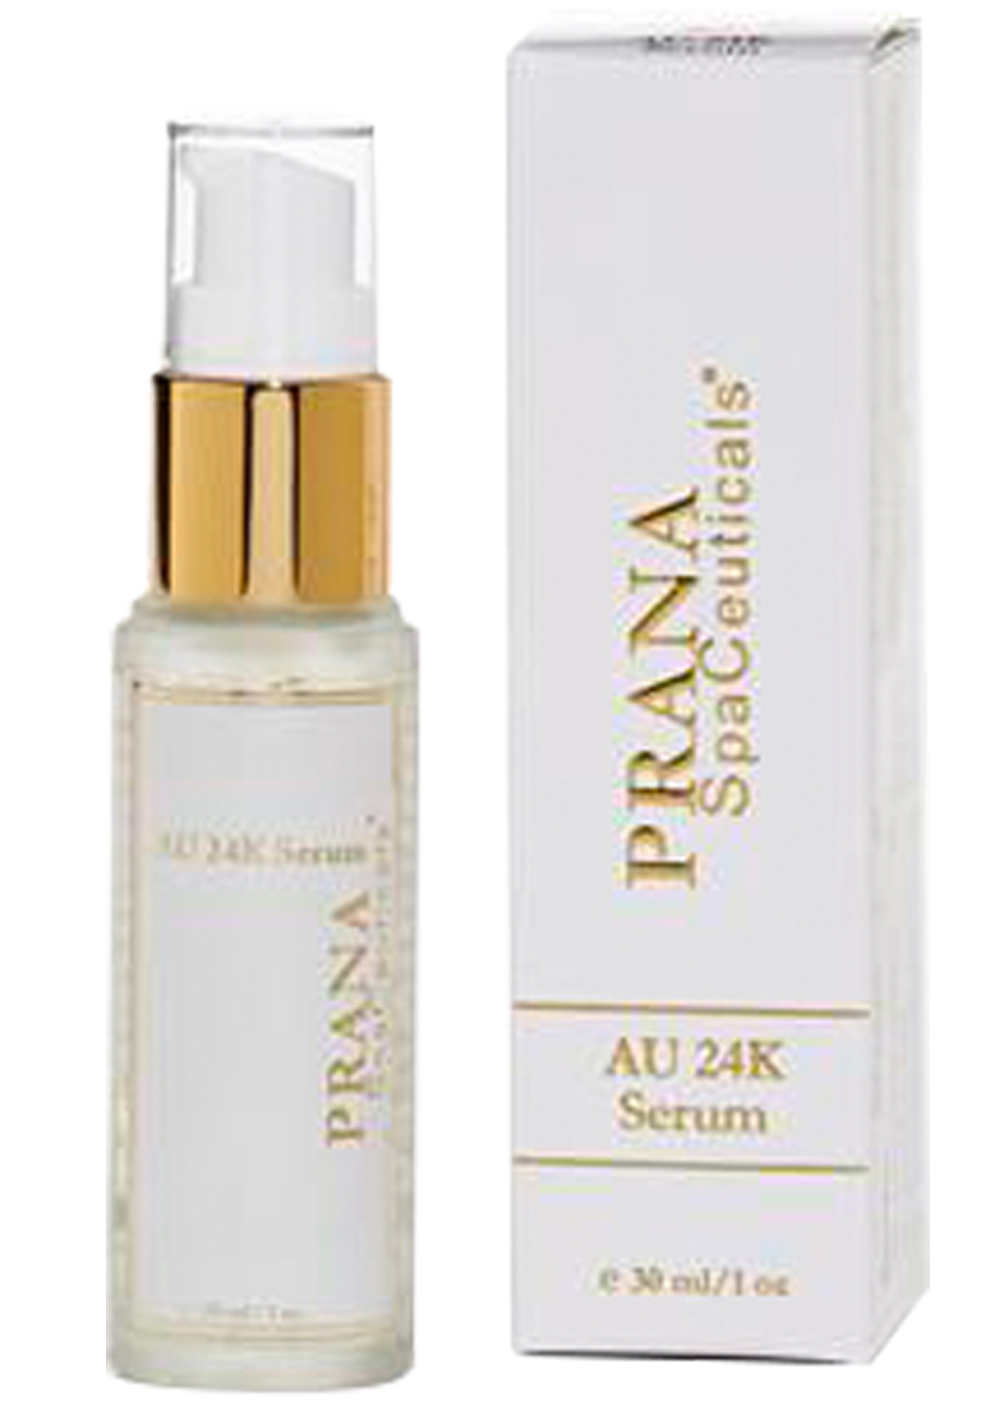 Prana SpaCeuticals AU 24K Serum 1oz - European Beauty by B